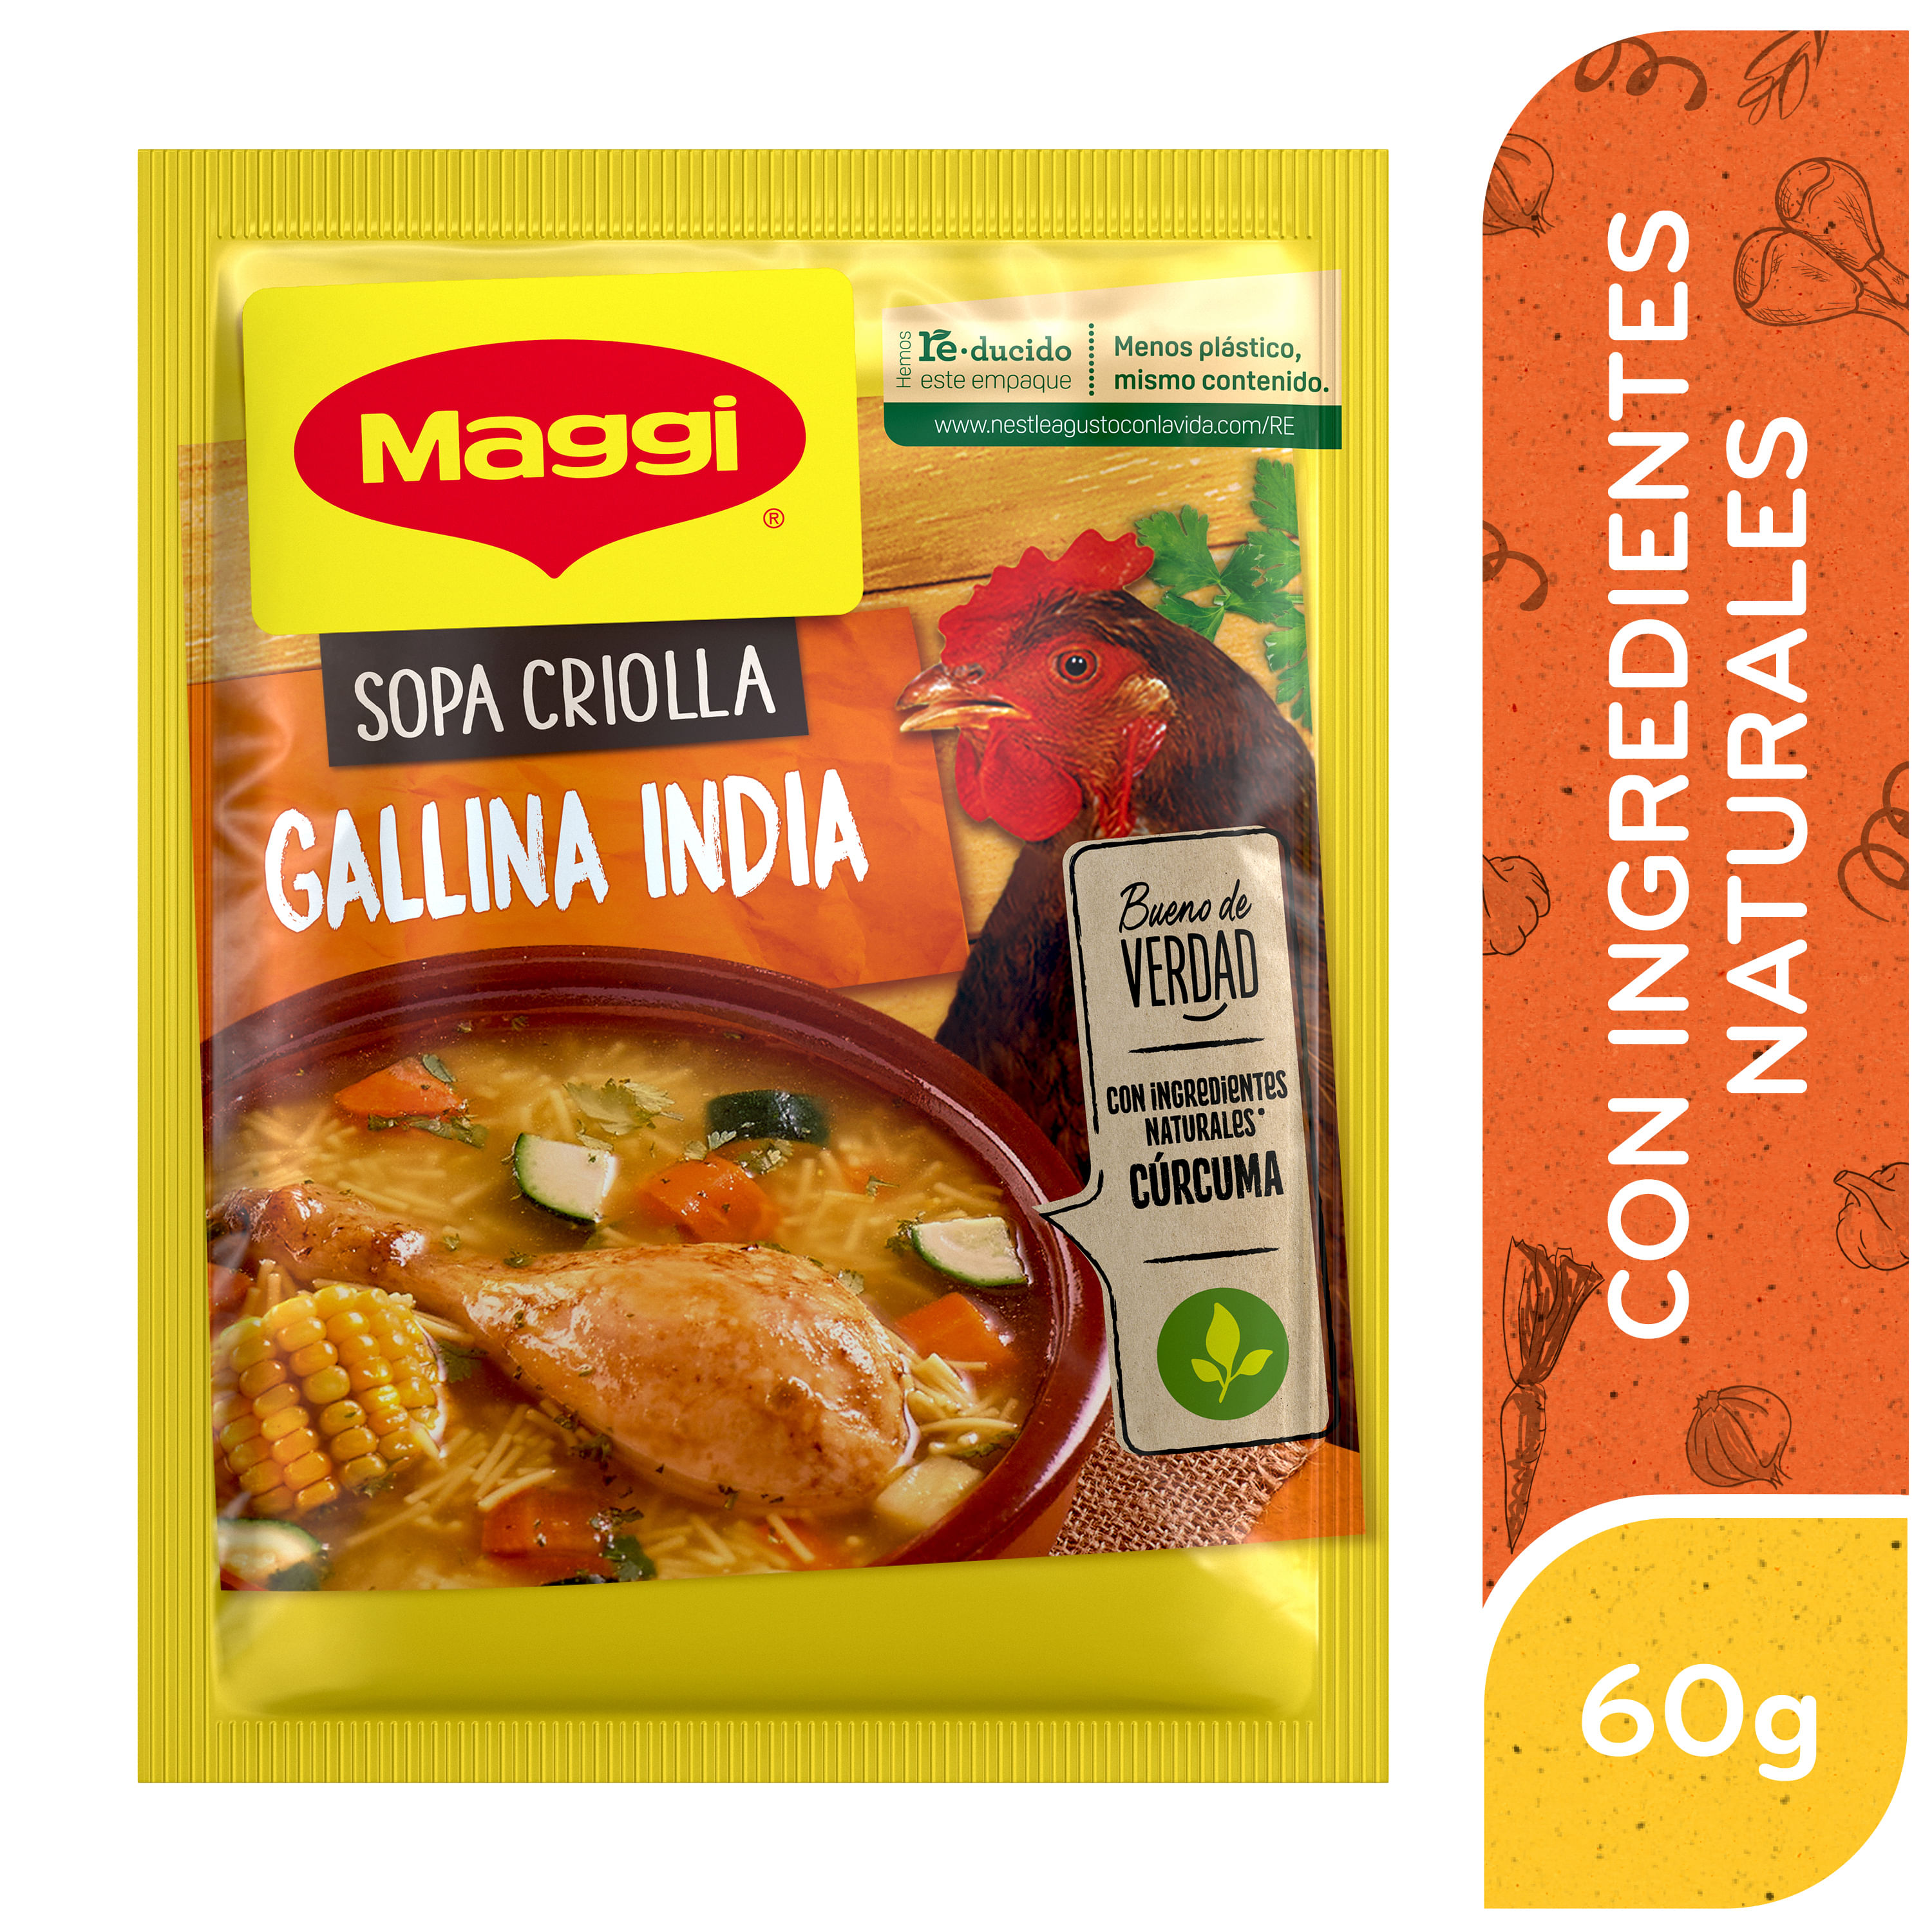 Sopa-Criolla-marca-Maggi-Gallina-India-sobre-60g-1-13756